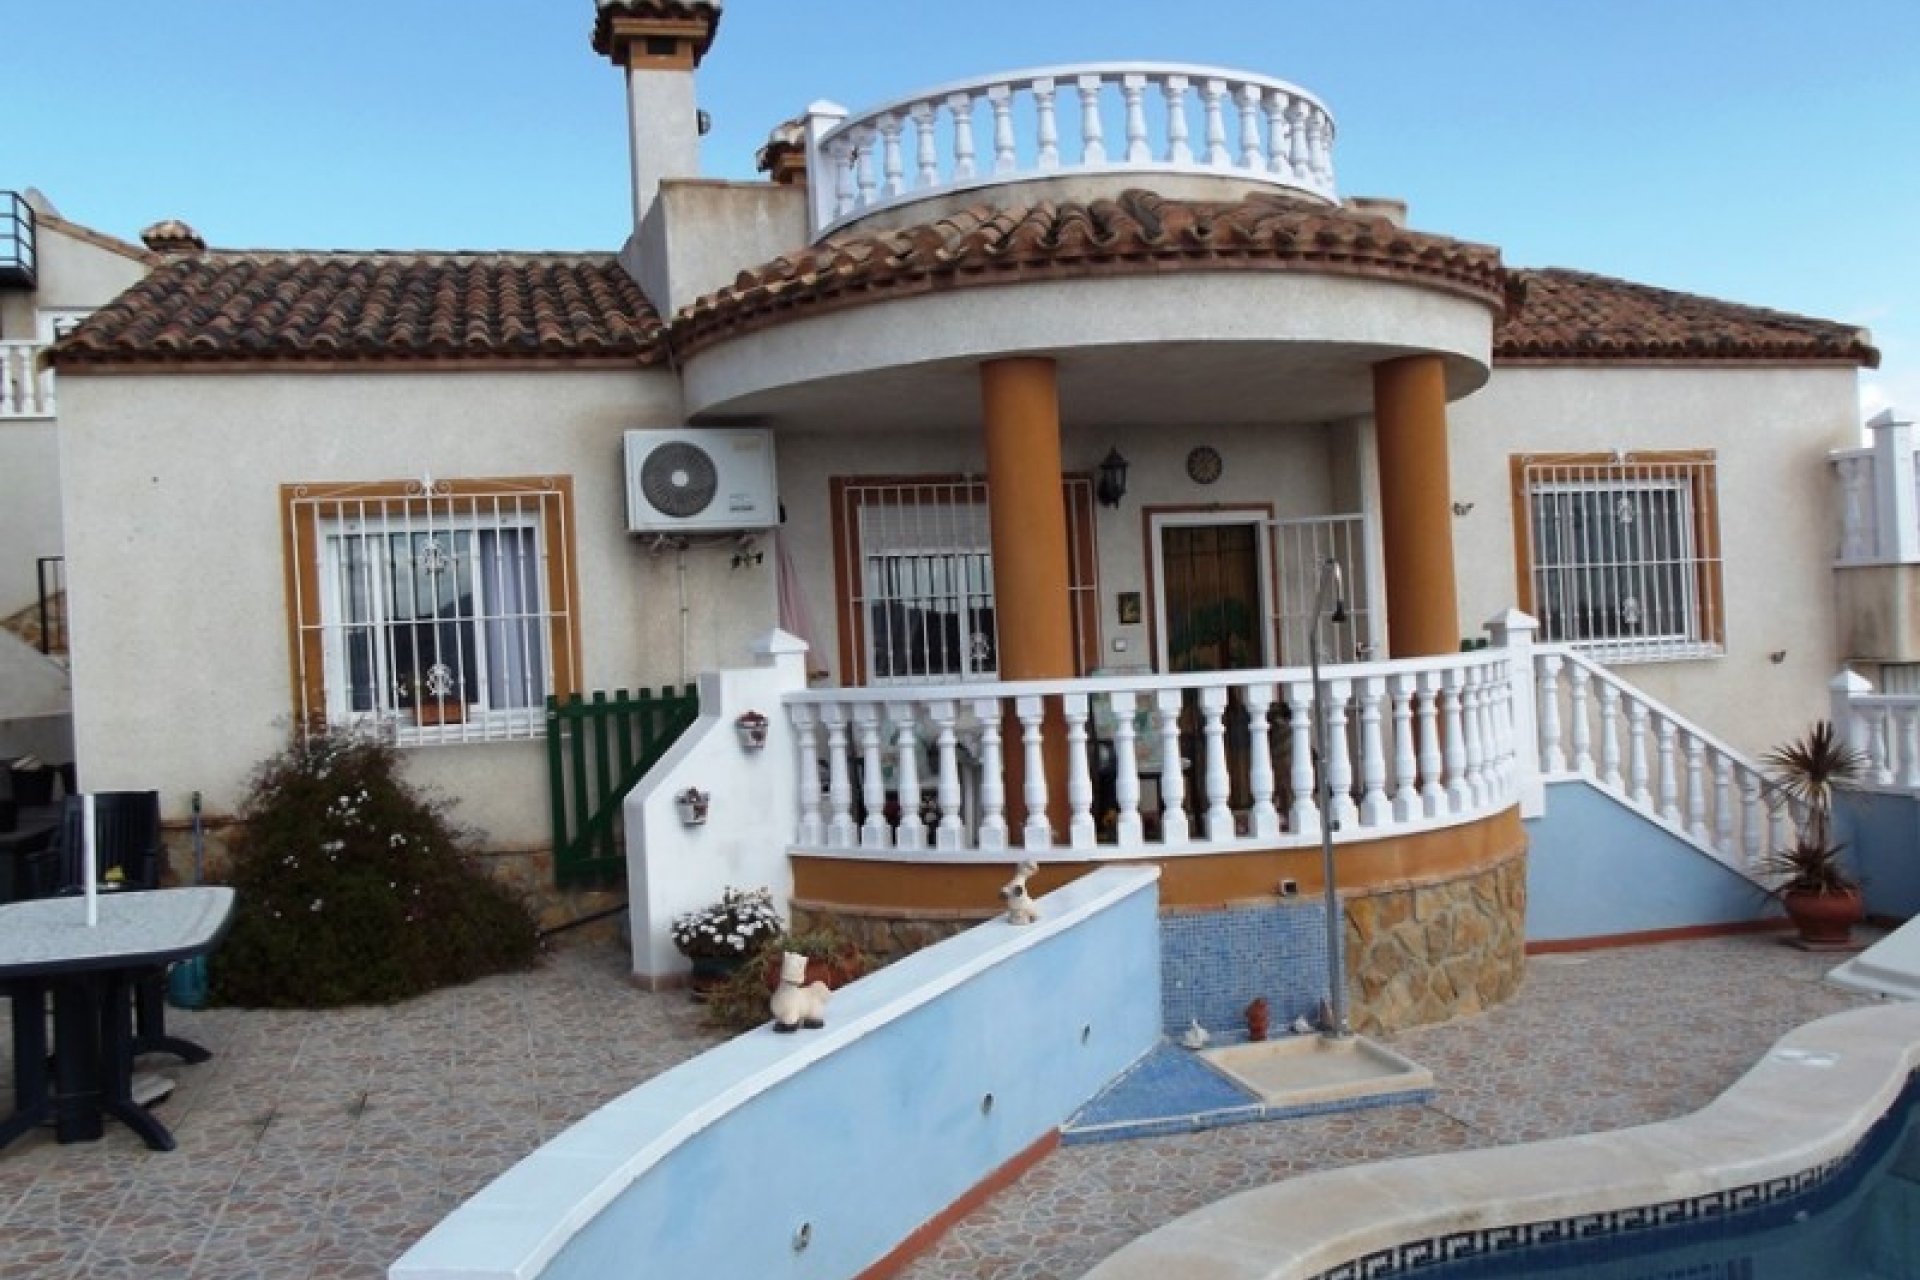 San Miguel cheap bargain property sale Costa Blanca Spain